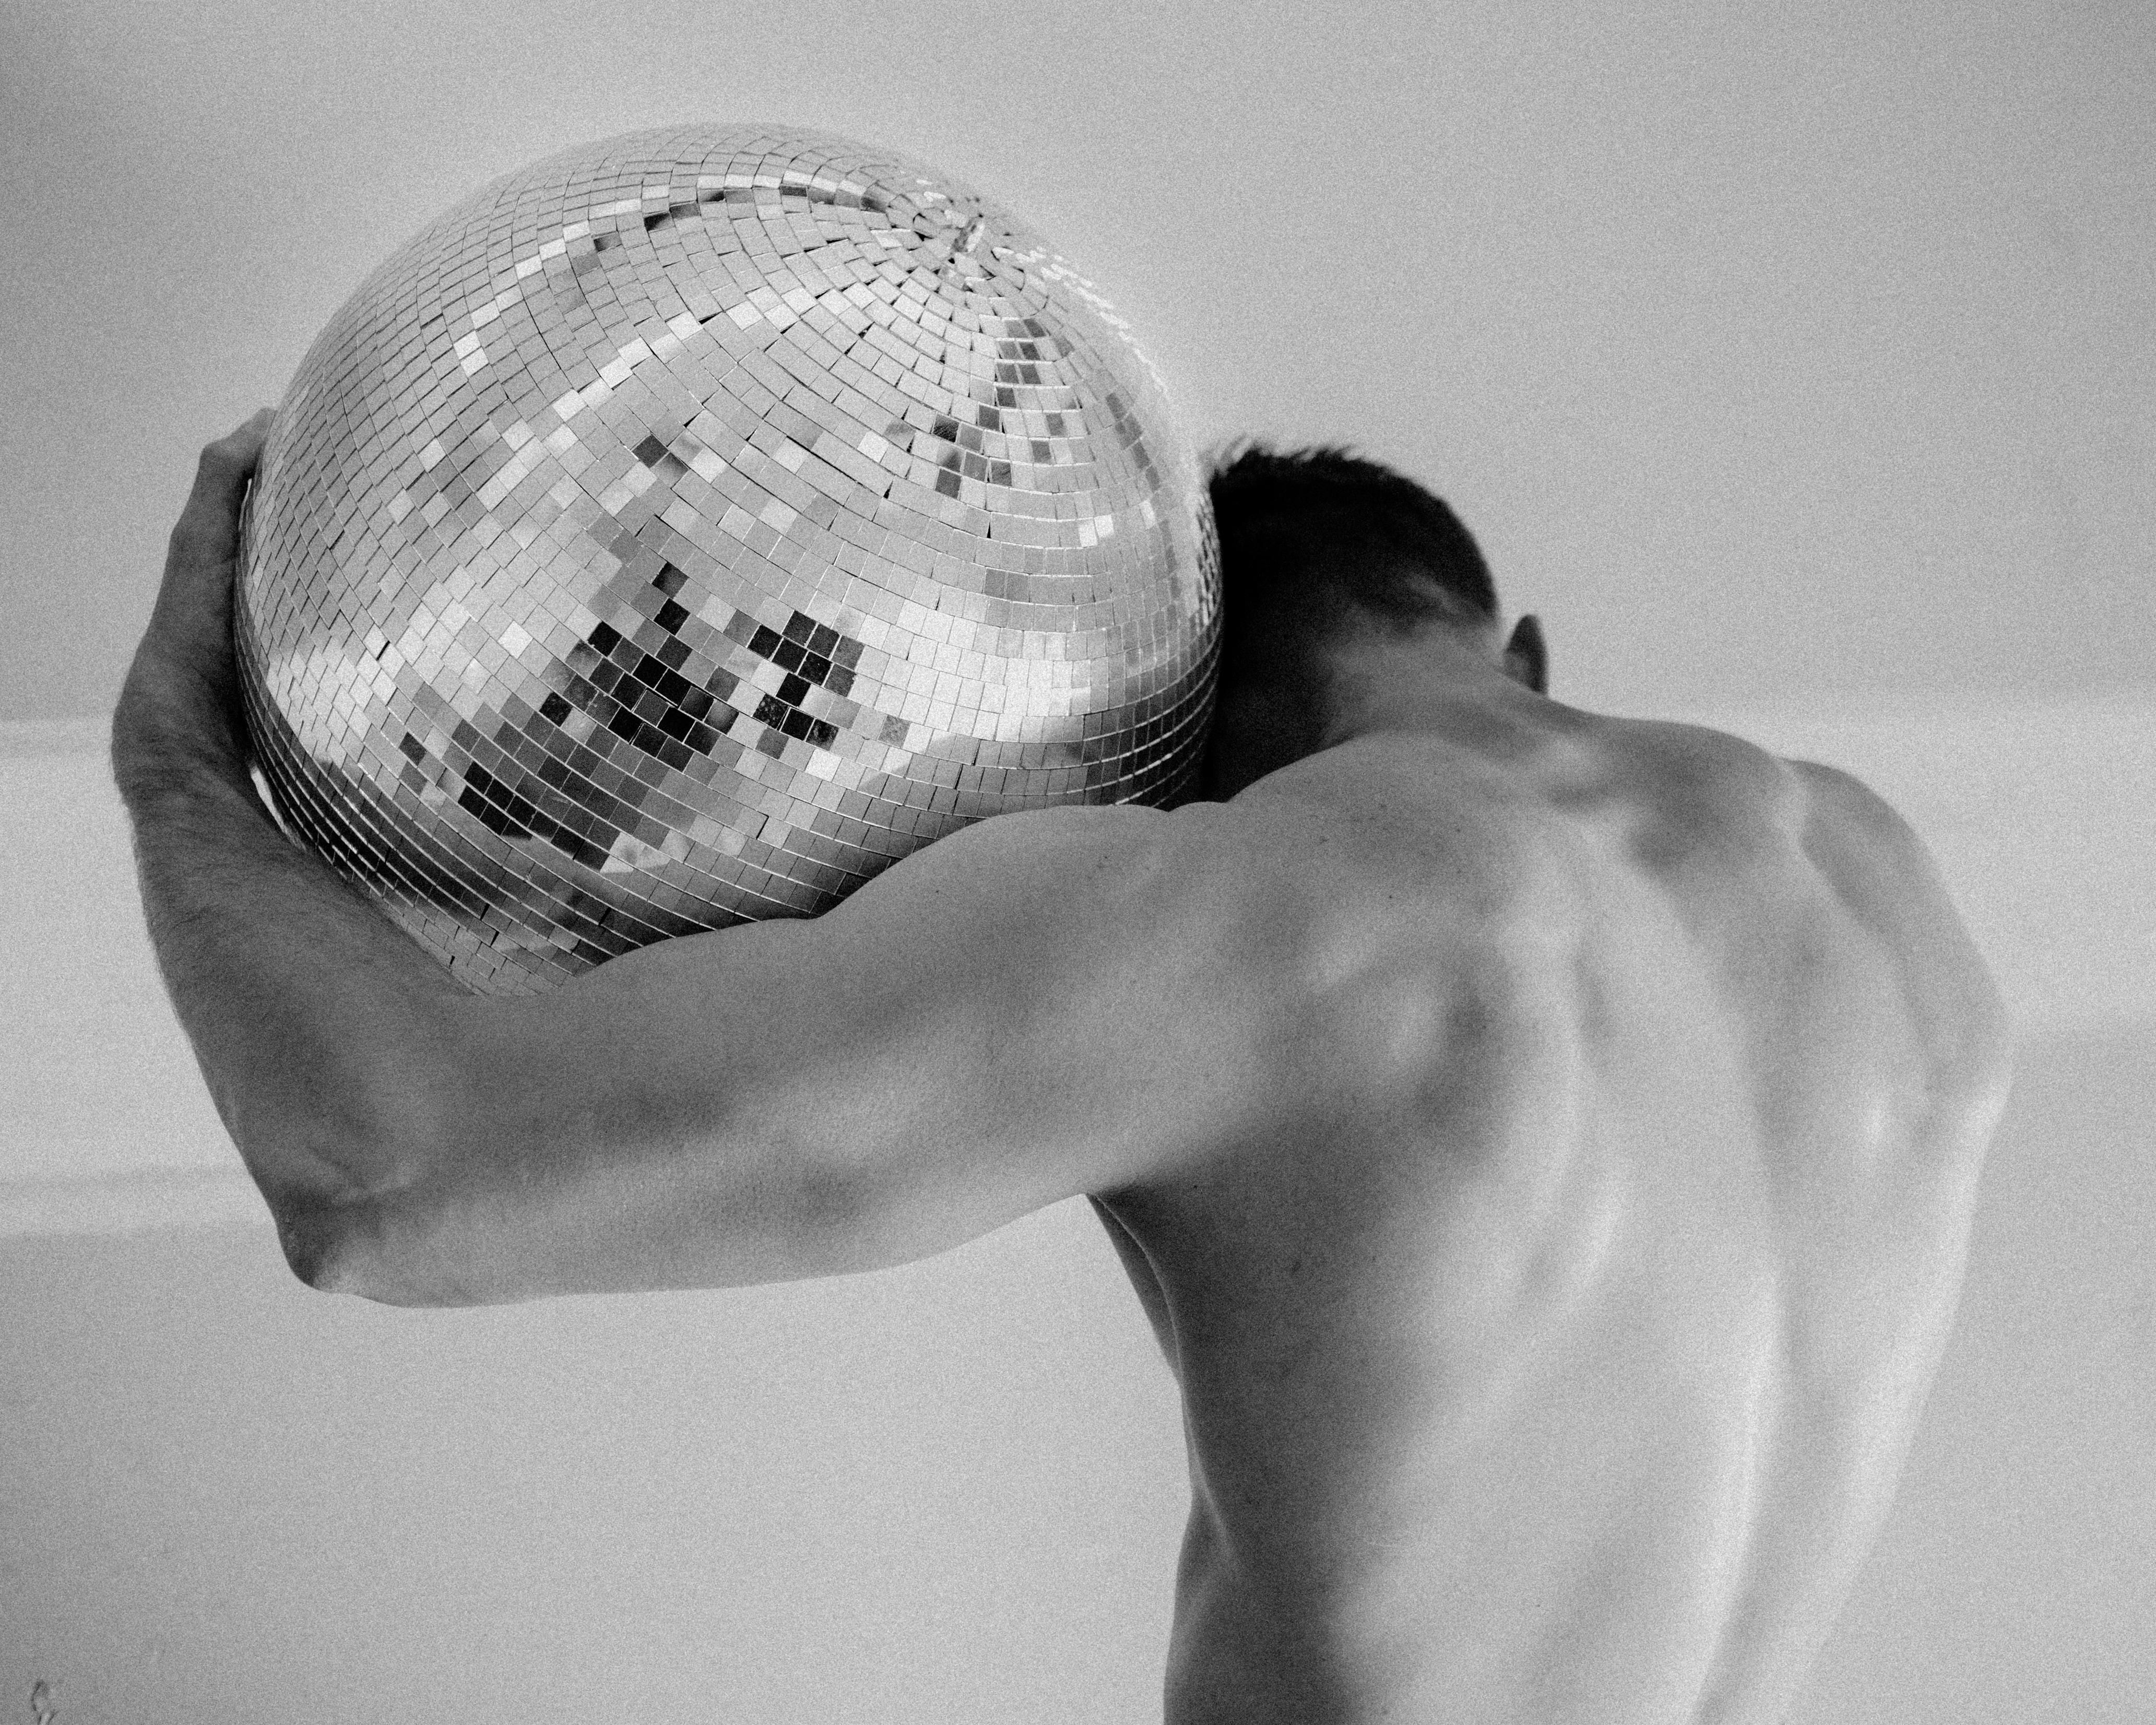 David Pugh Figurative Photograph - Disco Atlas (Disco Ball, Black & White, Atlas, Male Figure, Shiny, Gym, Workout)